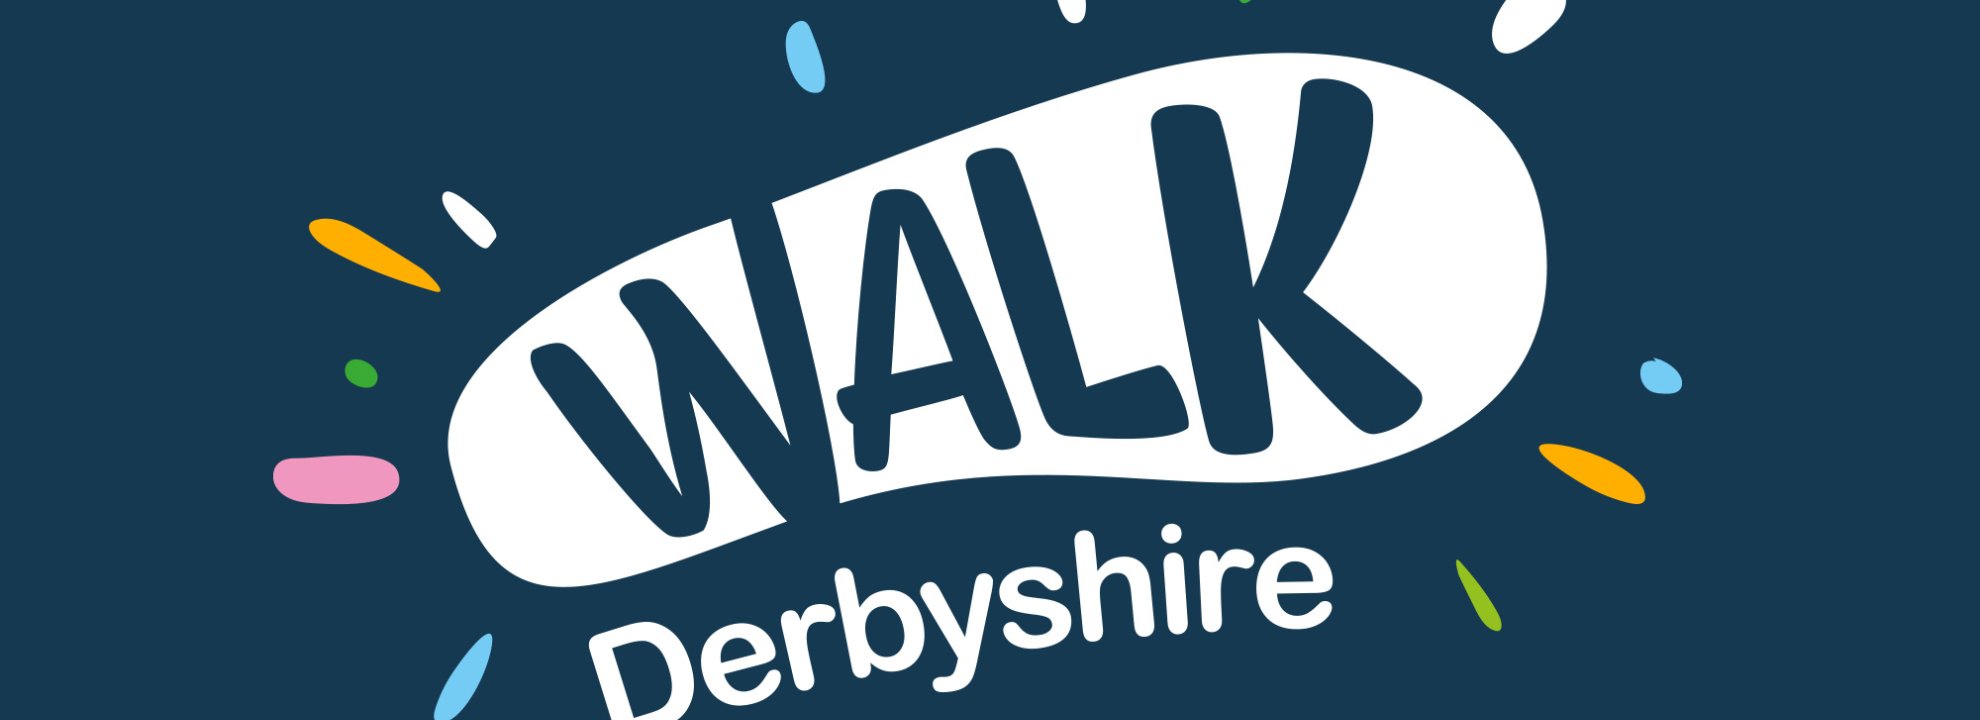 Walk Derbyshire Lead Banner